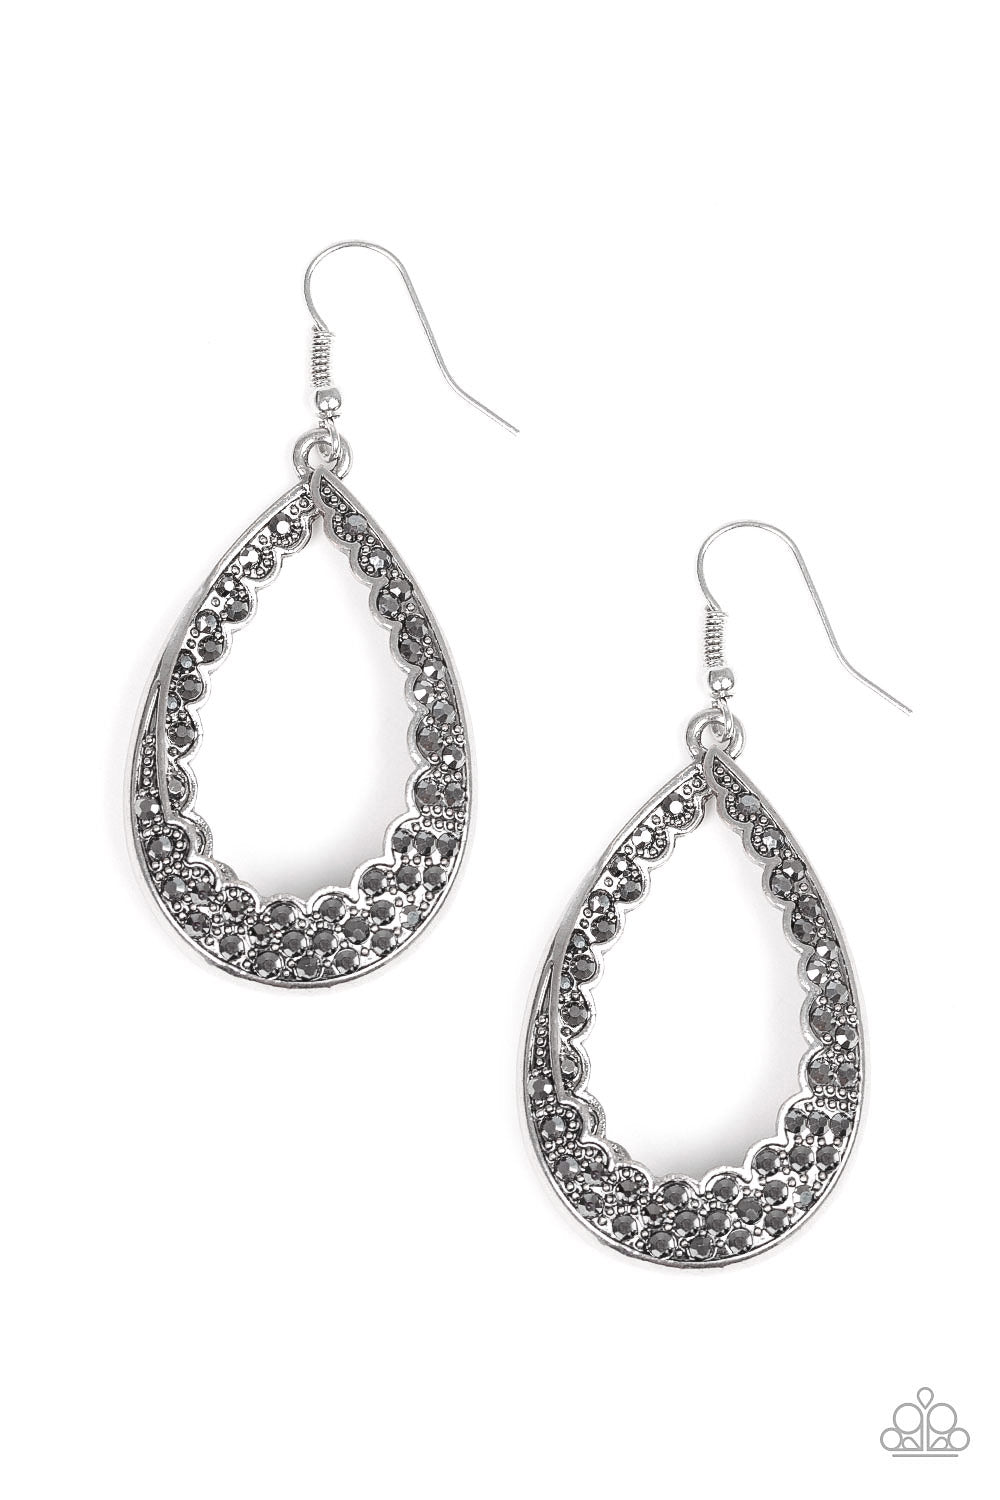 Paparazzi   Royal Treatment - Silver Teardrop - Hematite Rhinestones - Earrings - $5 Jewelry With Ashley Swint